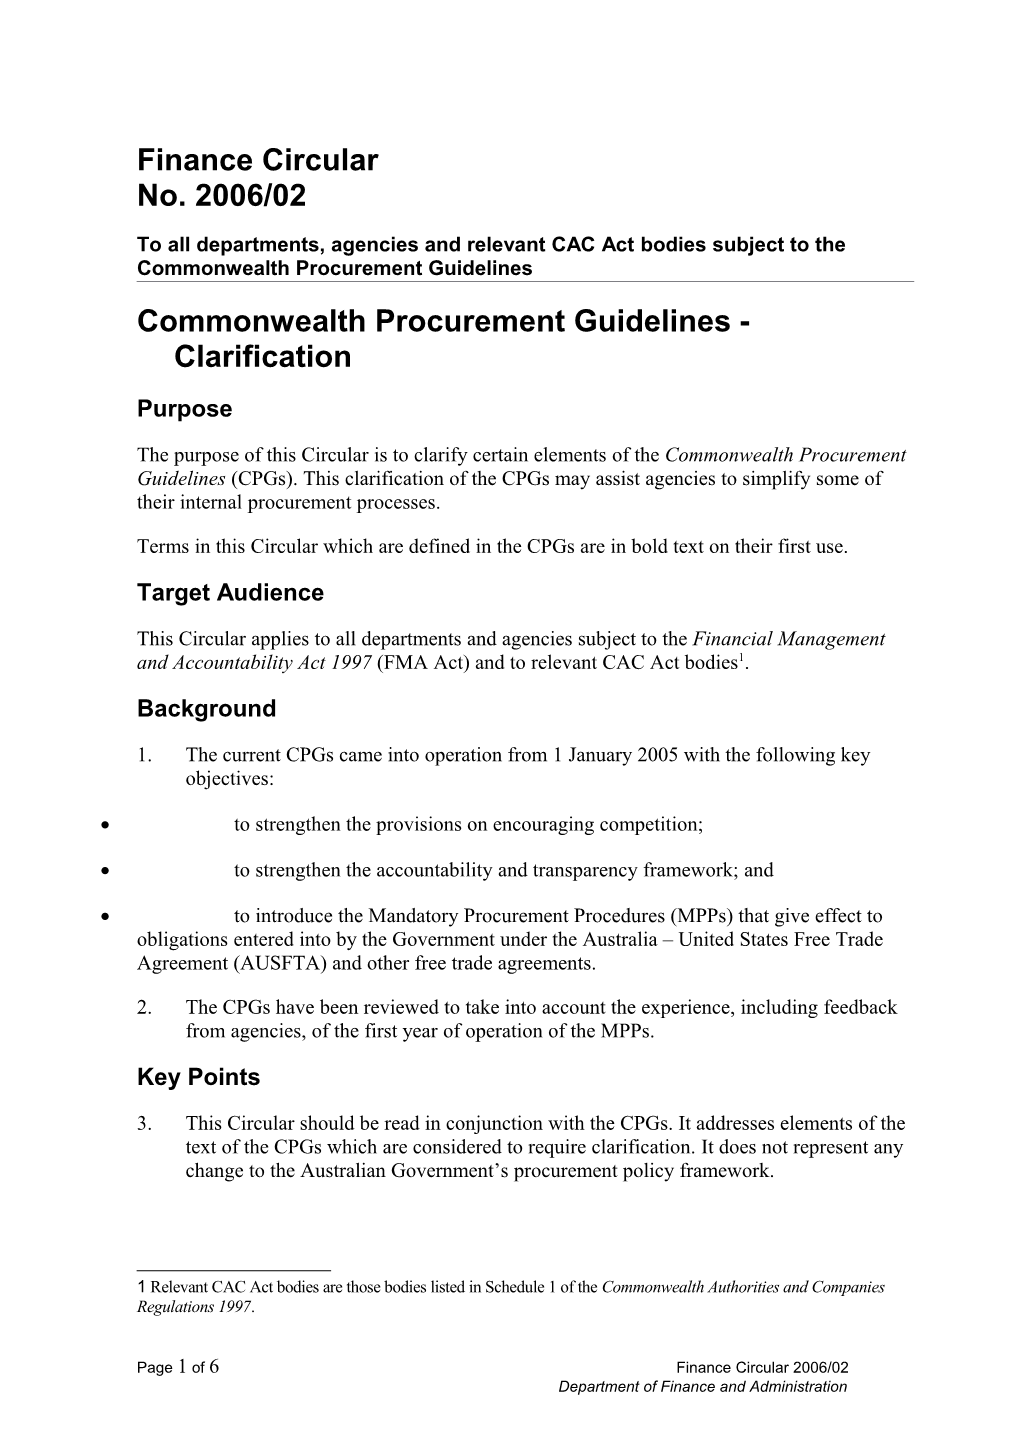 Commonwealth Procurement Guidelines - Clarification